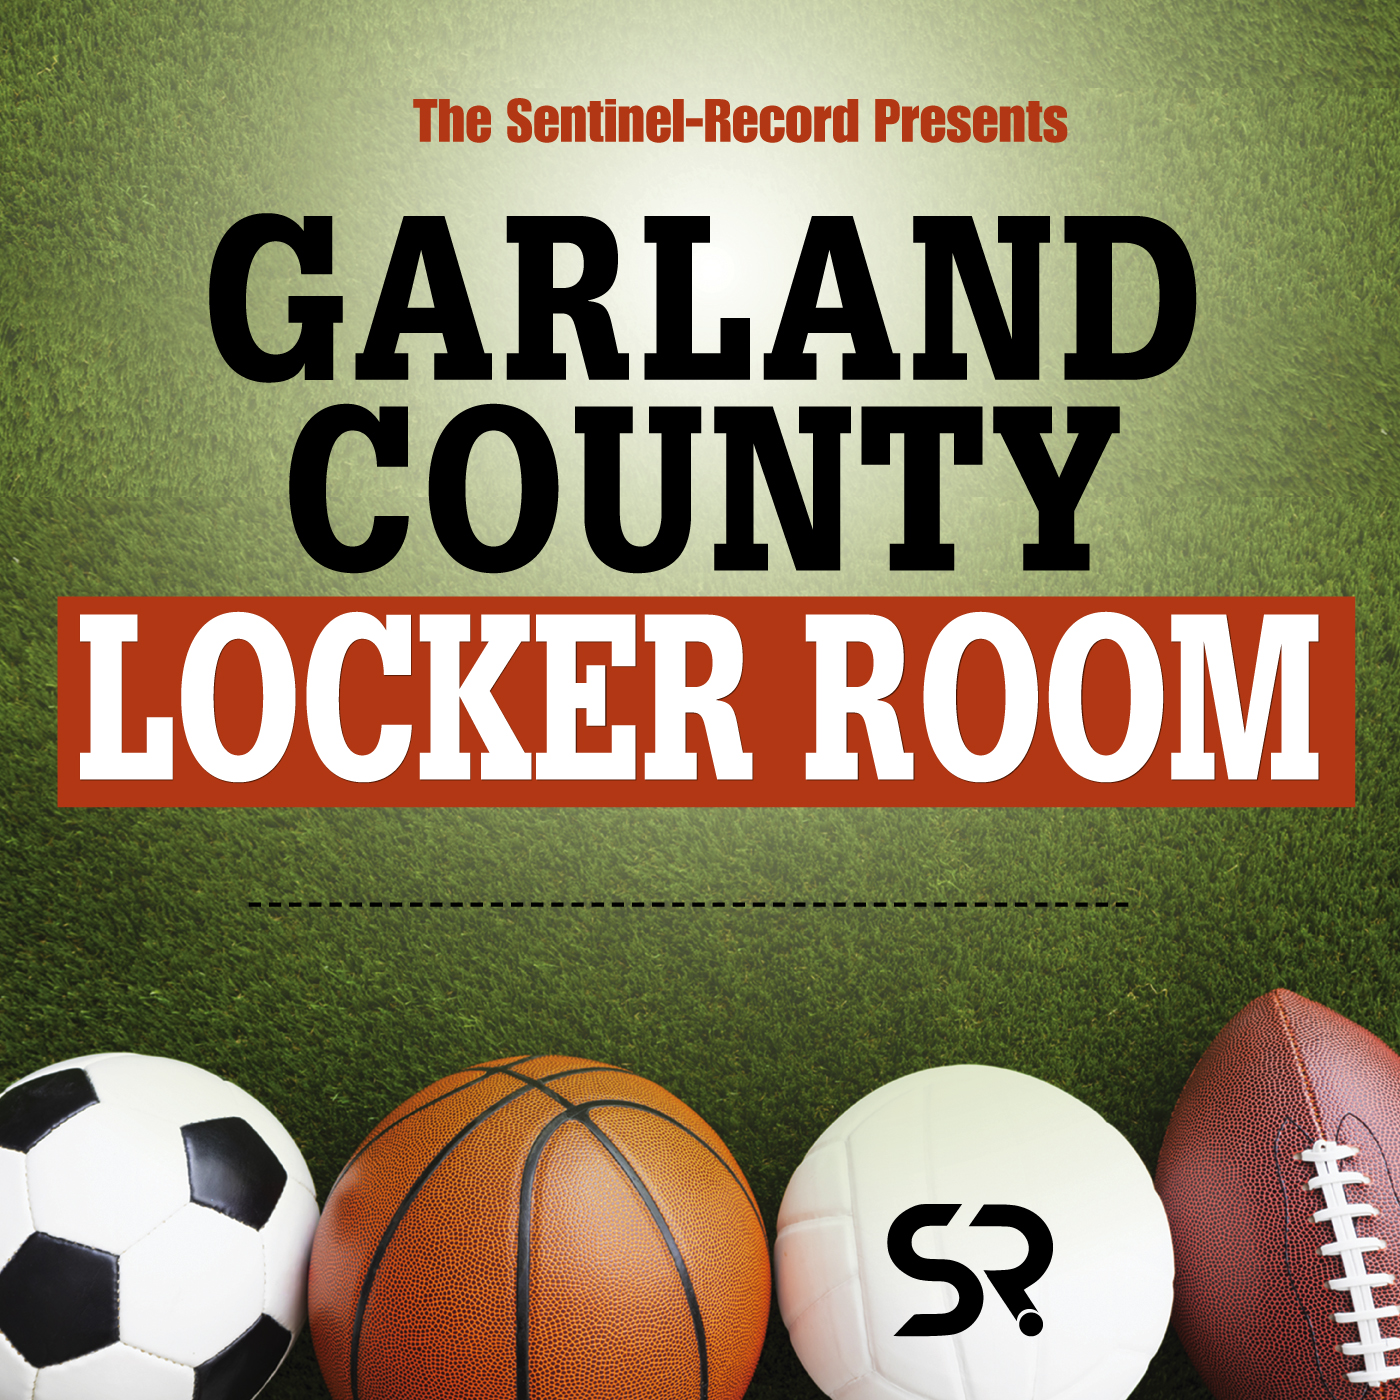 Garland County Locker Room